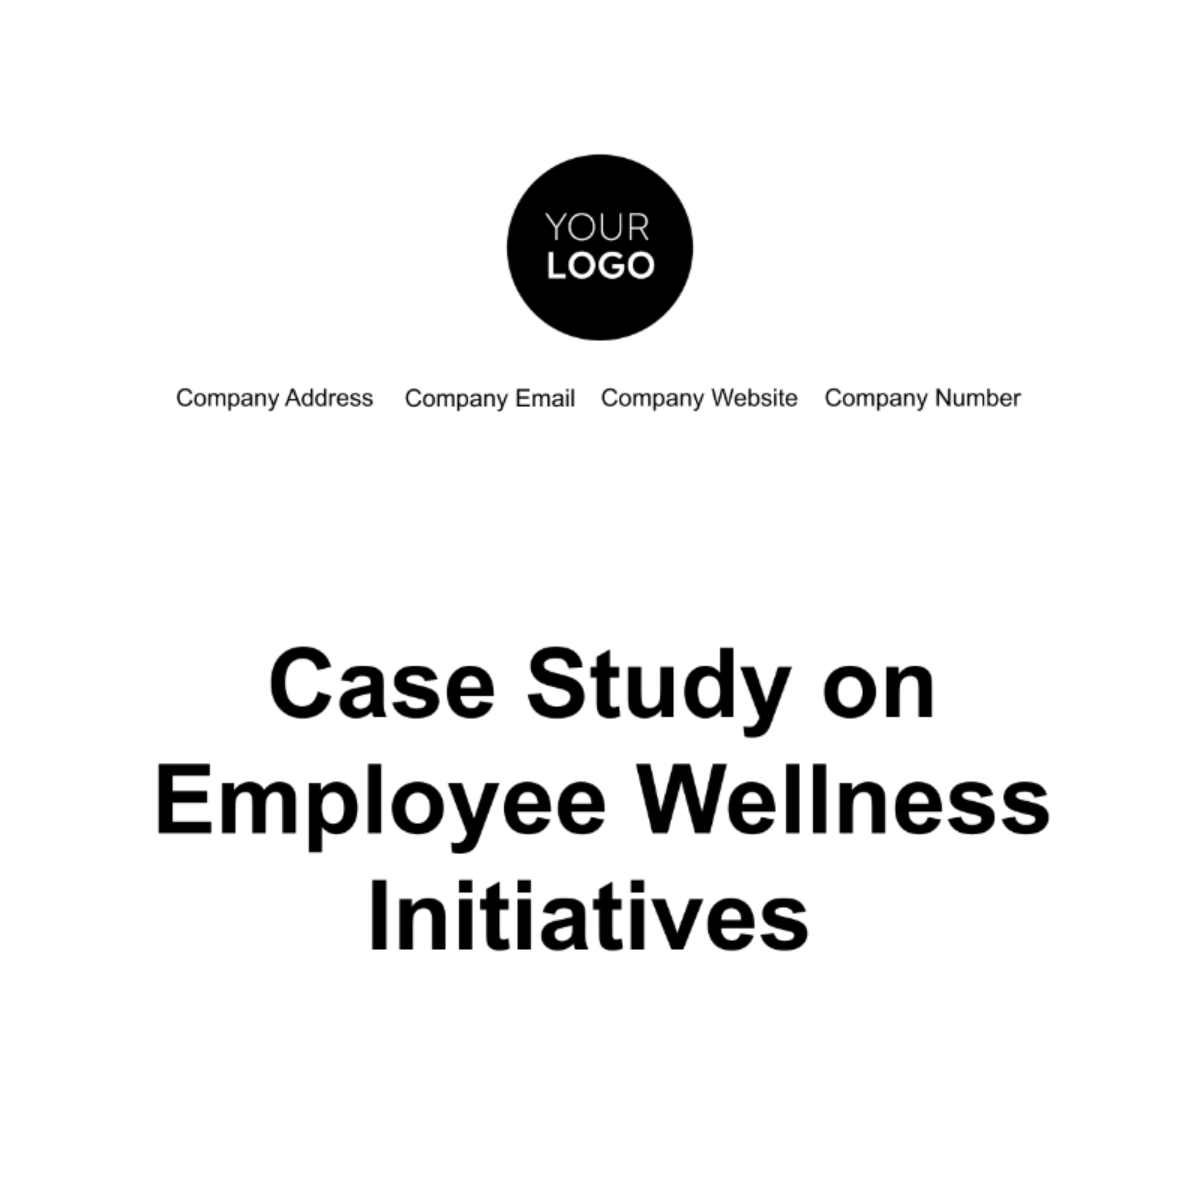 Case Study on Employee Wellness Initiatives Template